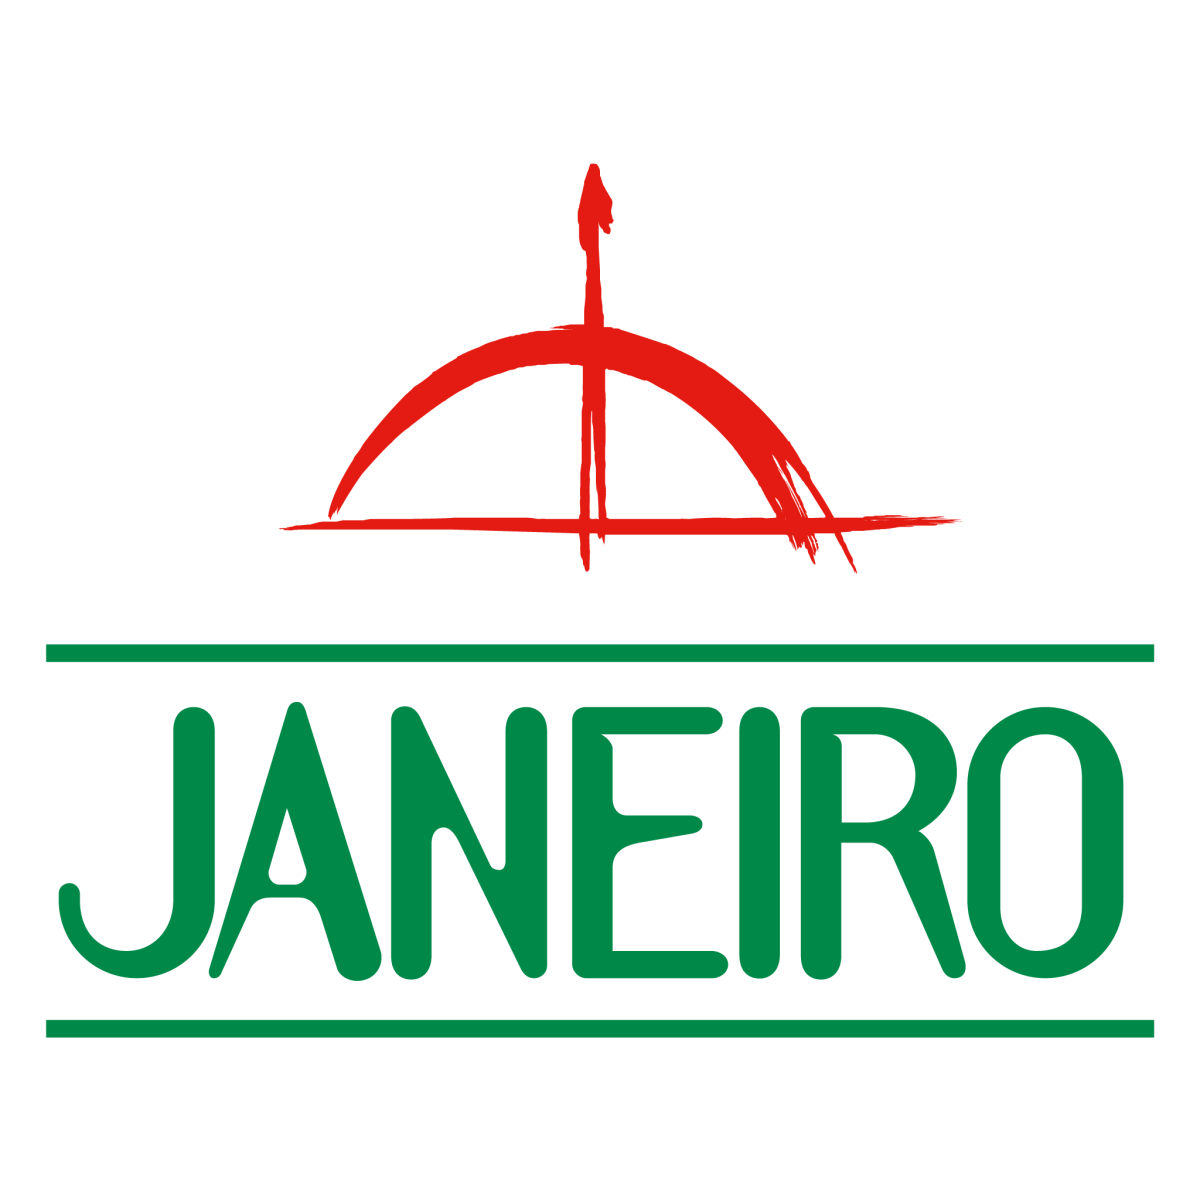 JANEIRO